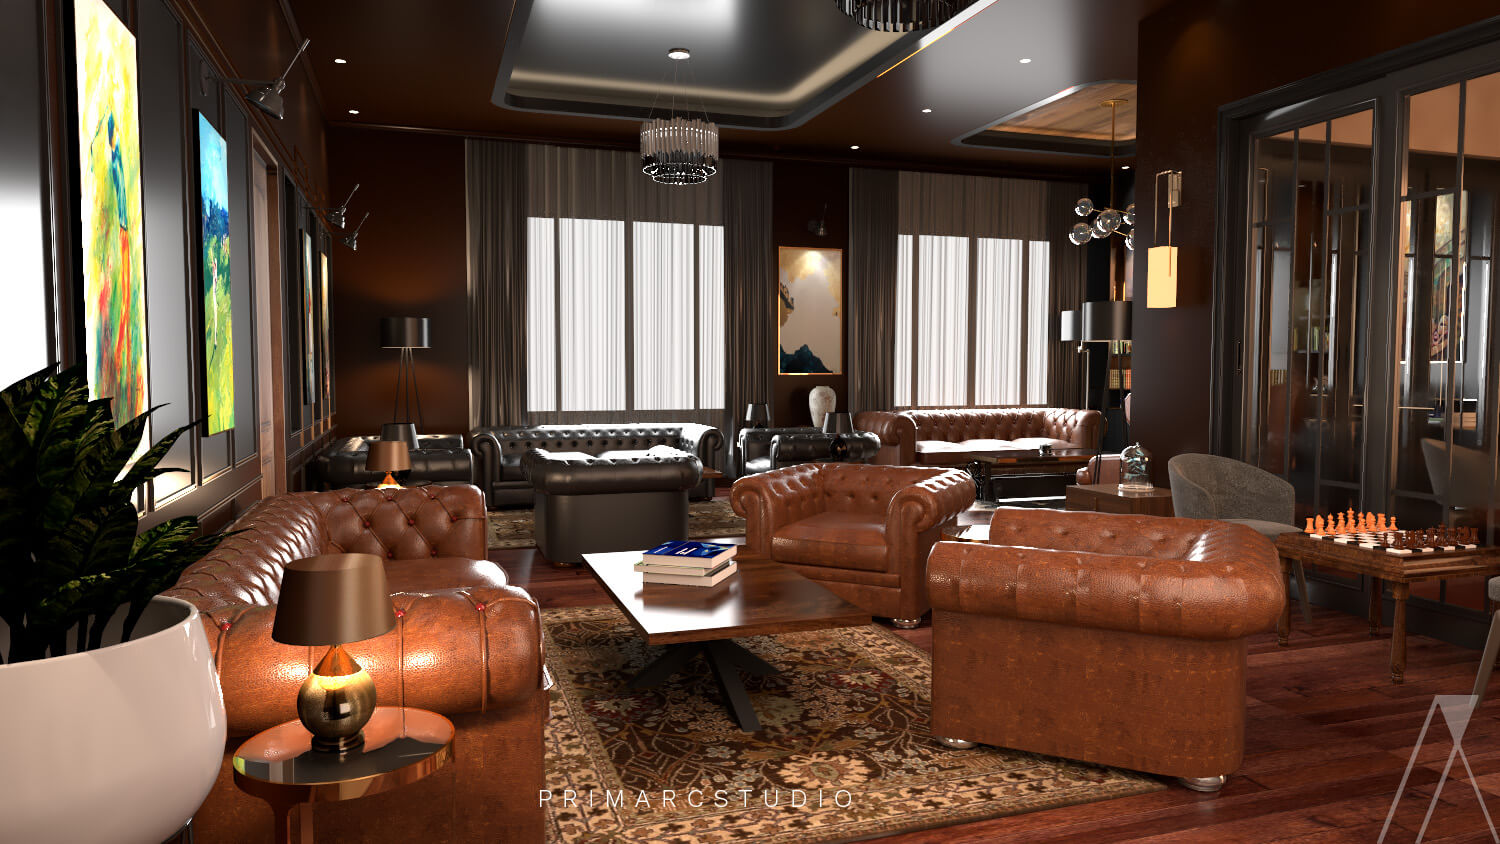 Cigar lounge's interior design